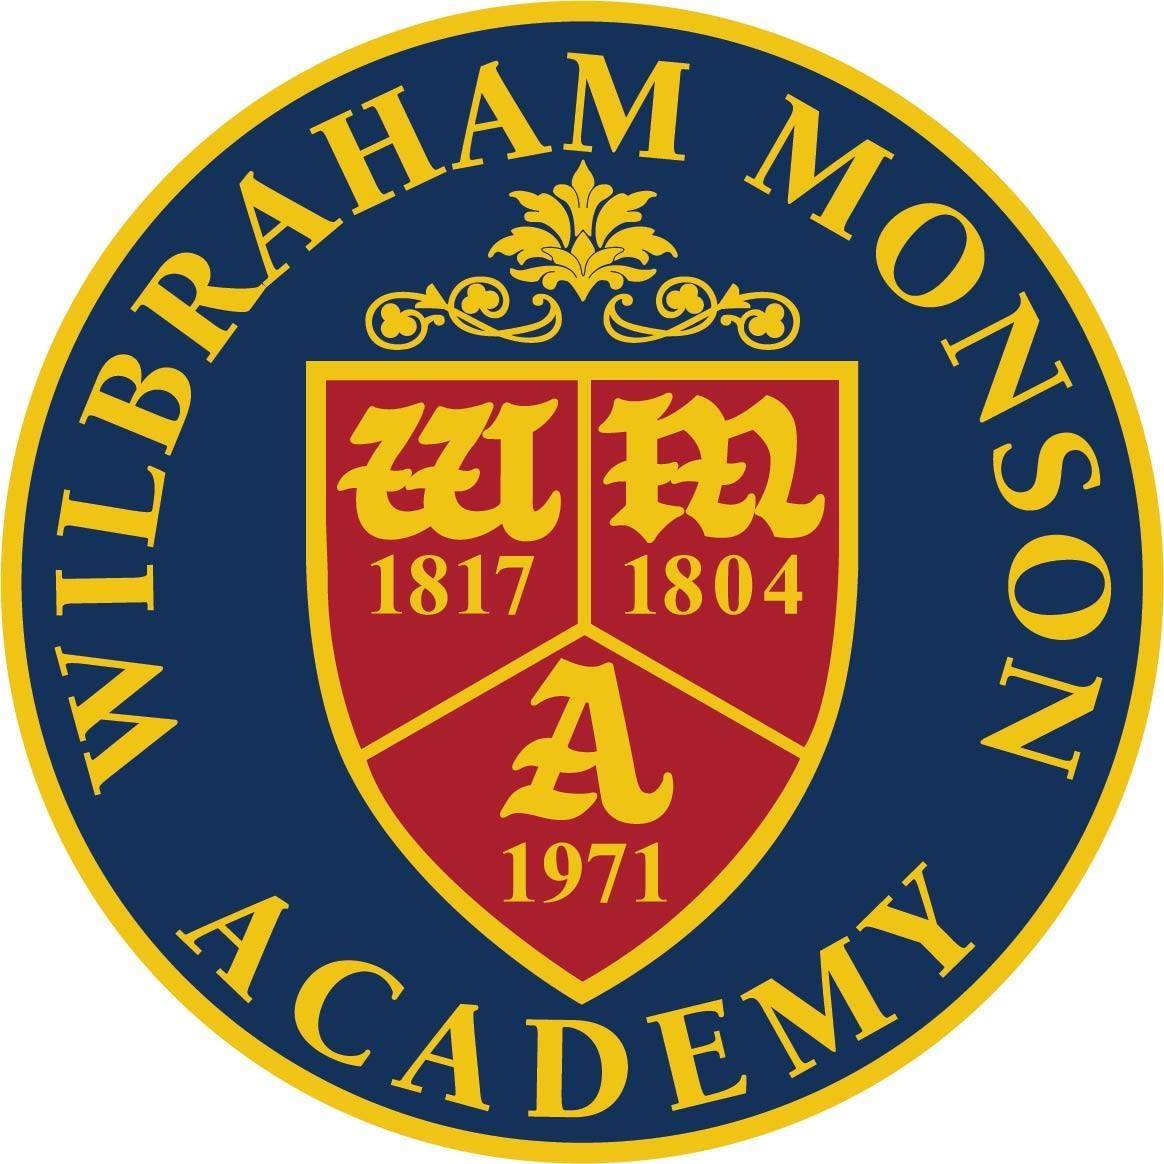 Wilbraham and Monson Academy - UNIMATES Education